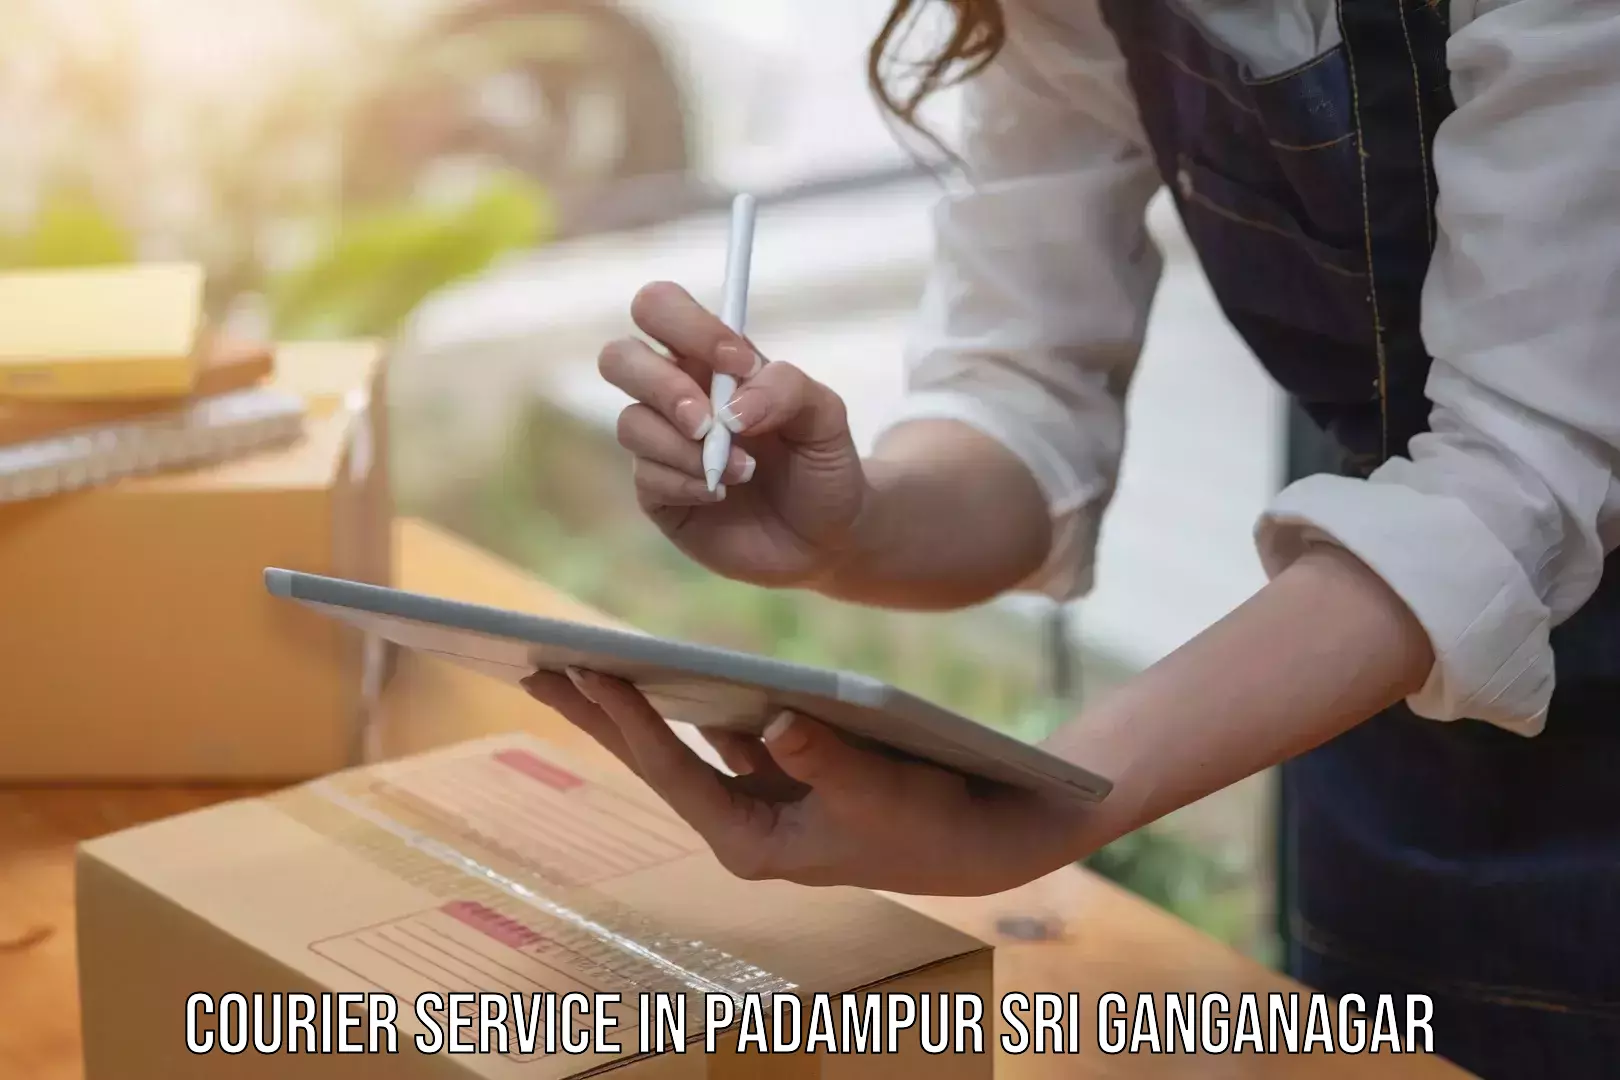 Personal courier services in Padampur Sri Ganganagar